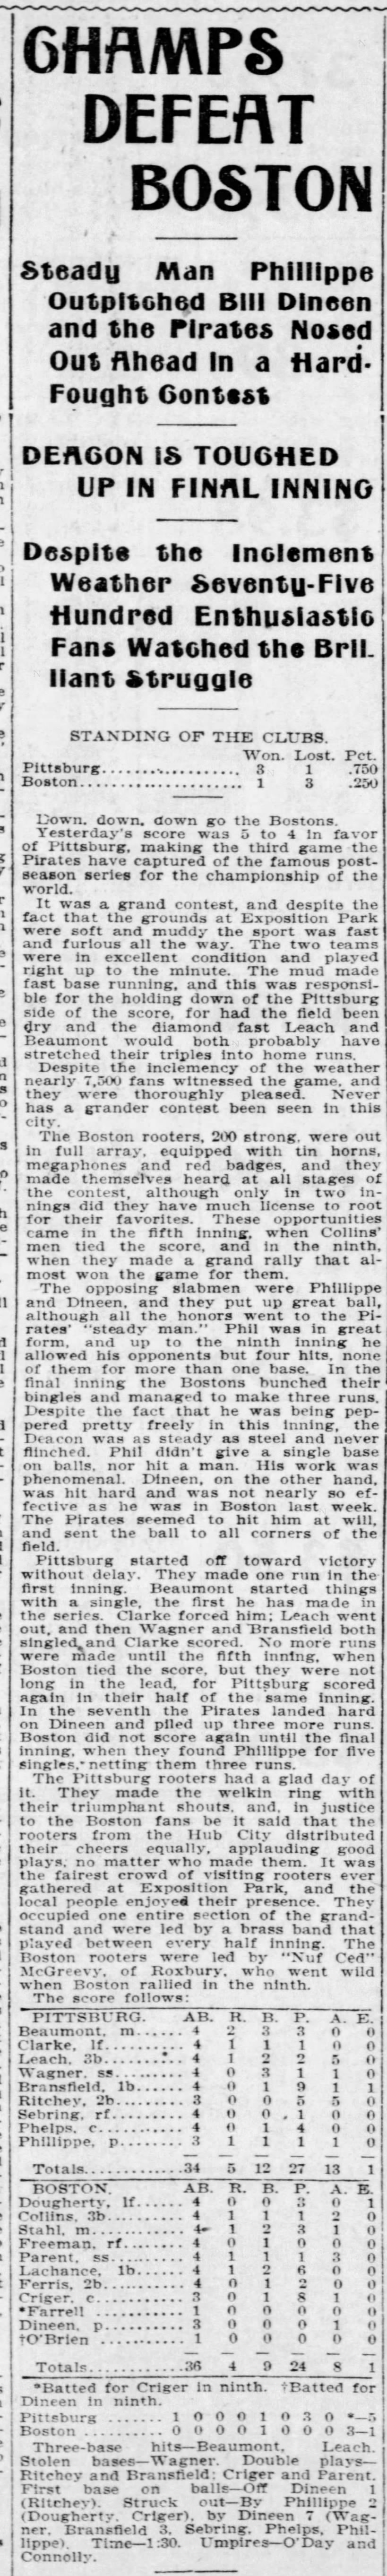 1903 World Series game 4